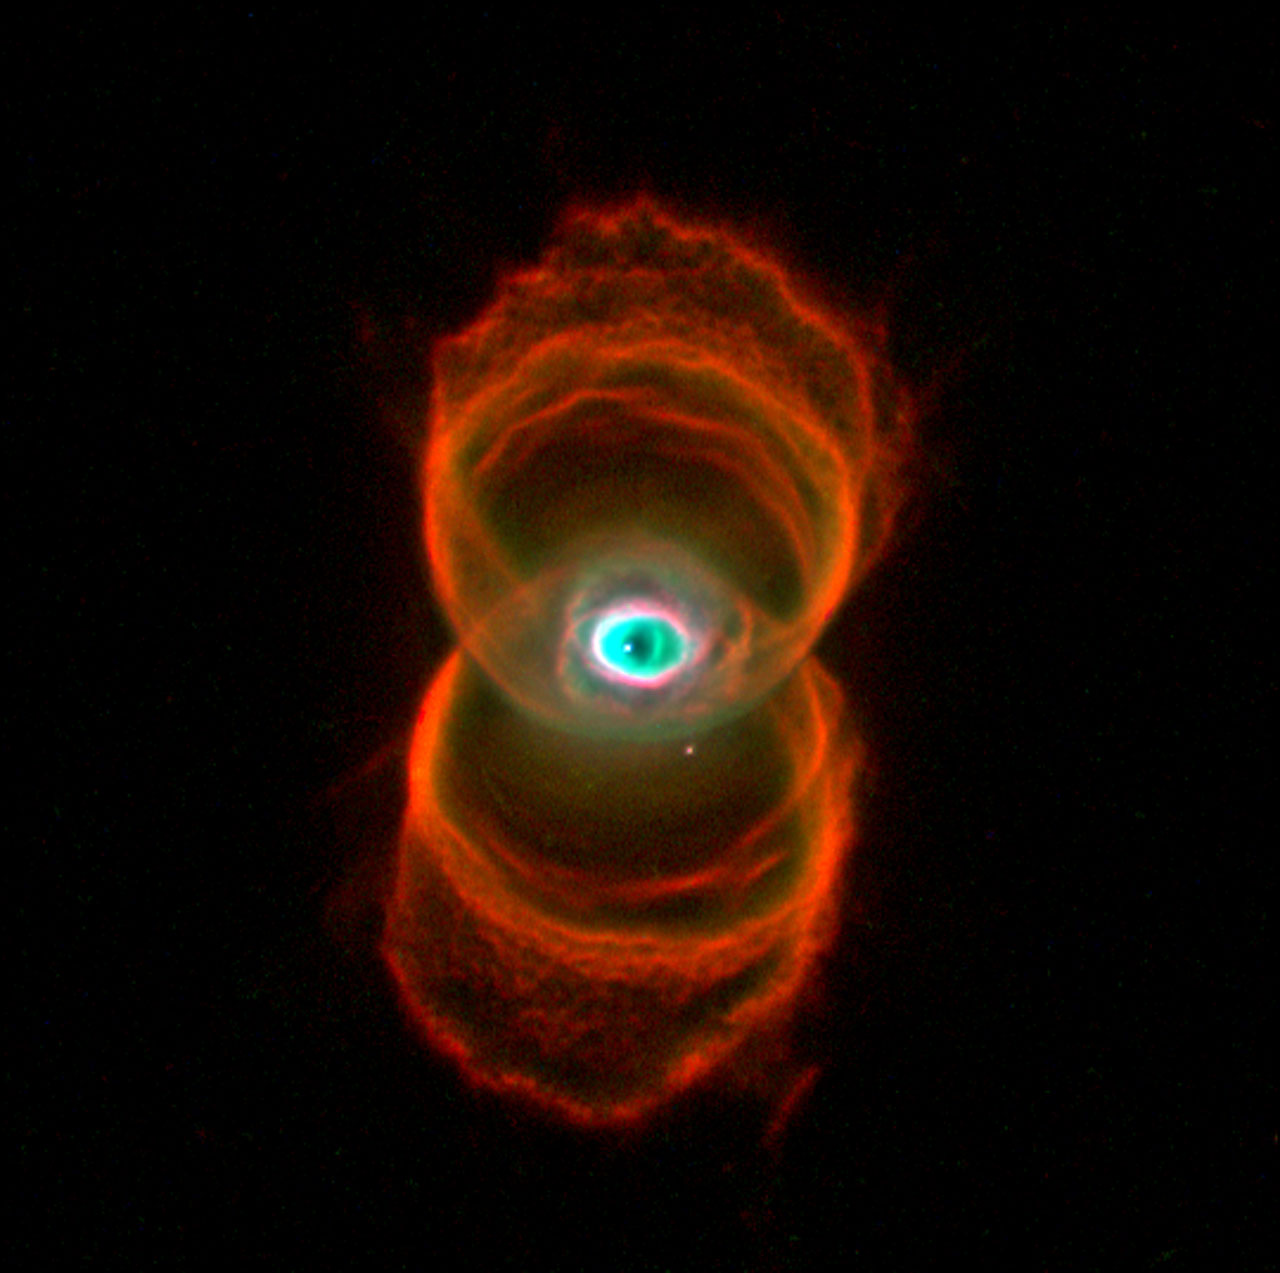 The Hourglass Nebula Esa Hubble